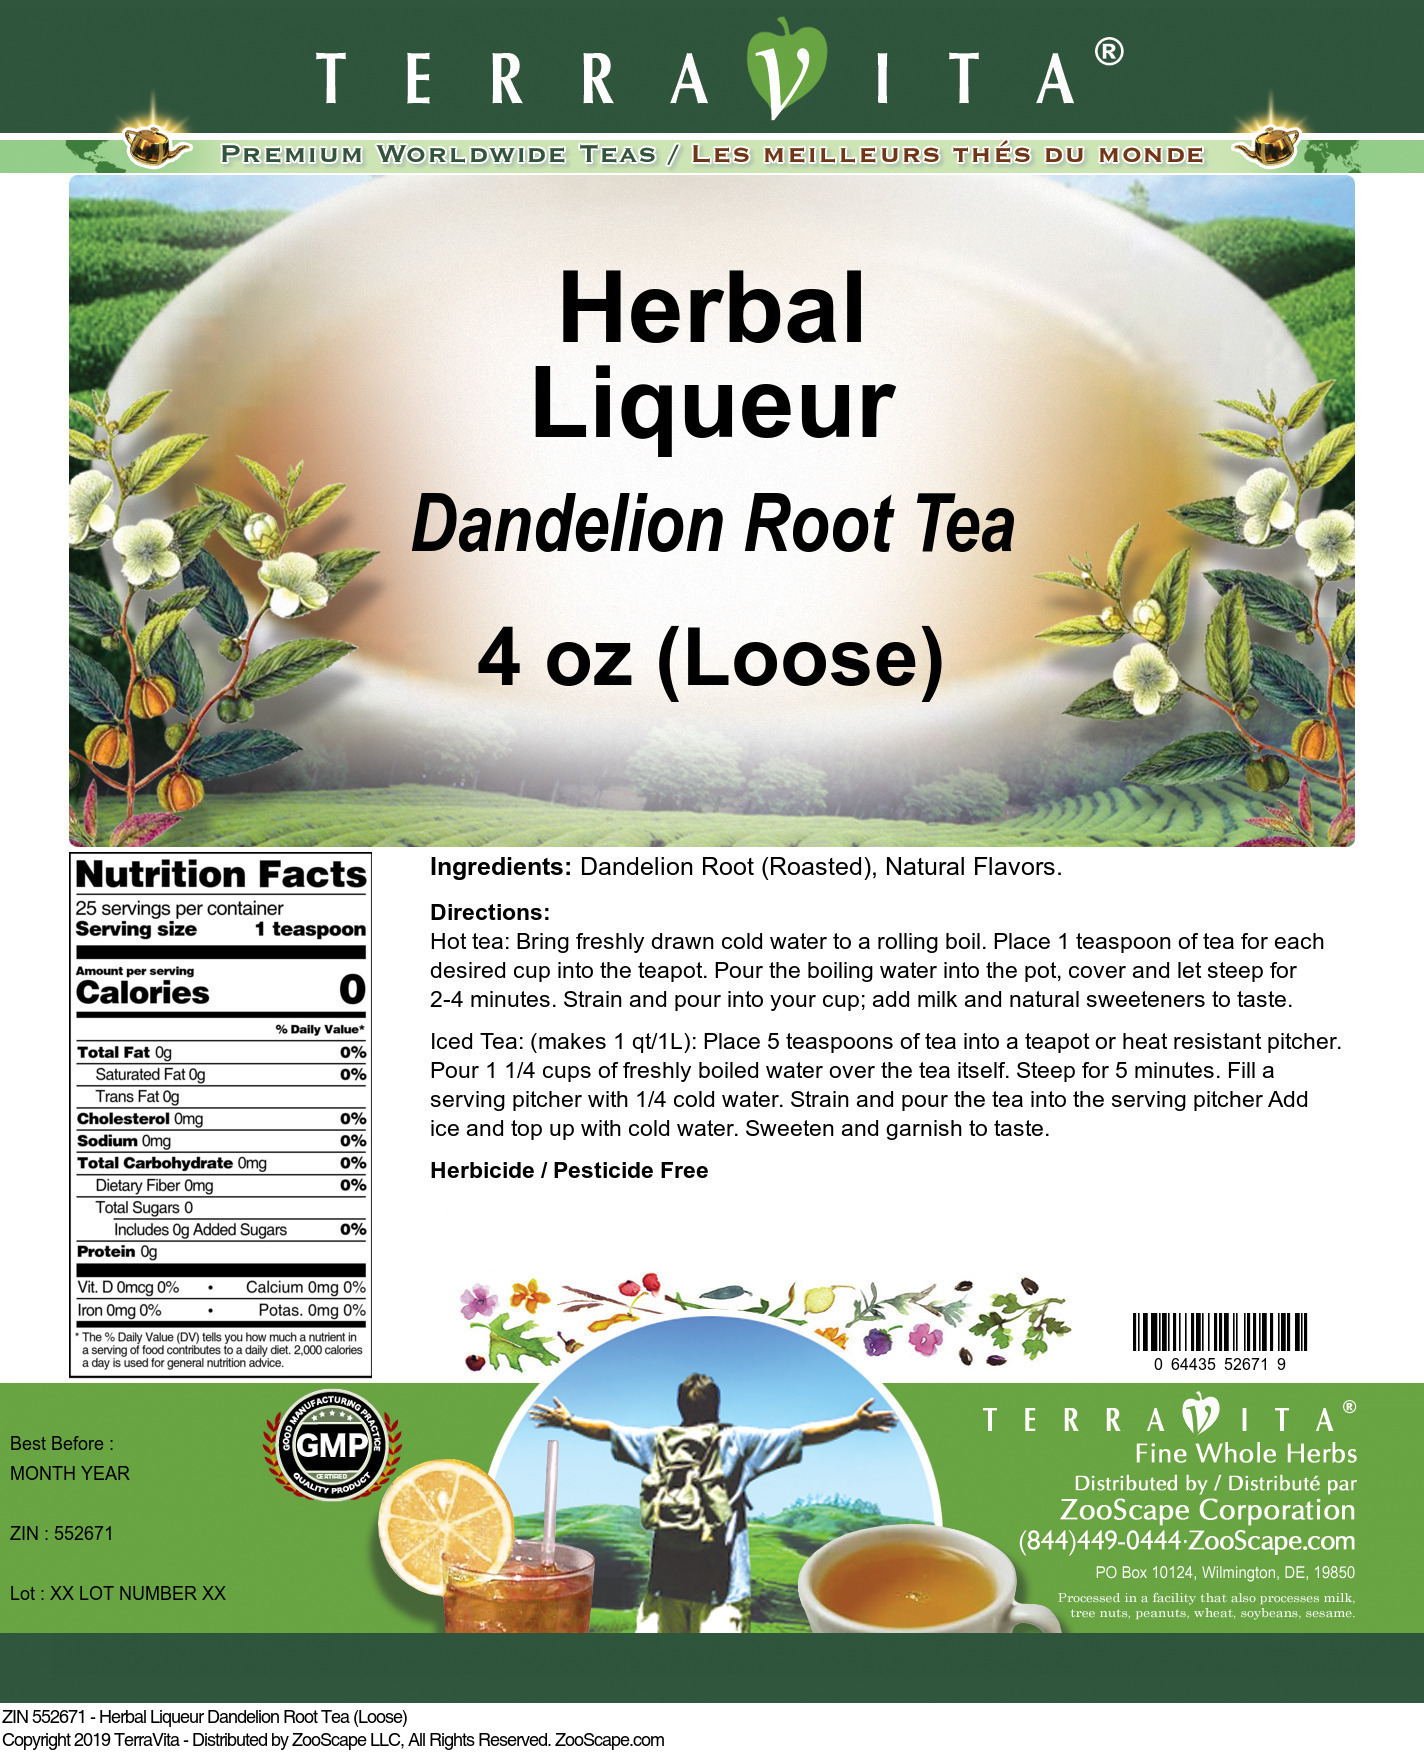 Herbal Liqueur Dandelion Root Tea (Loose) - Label